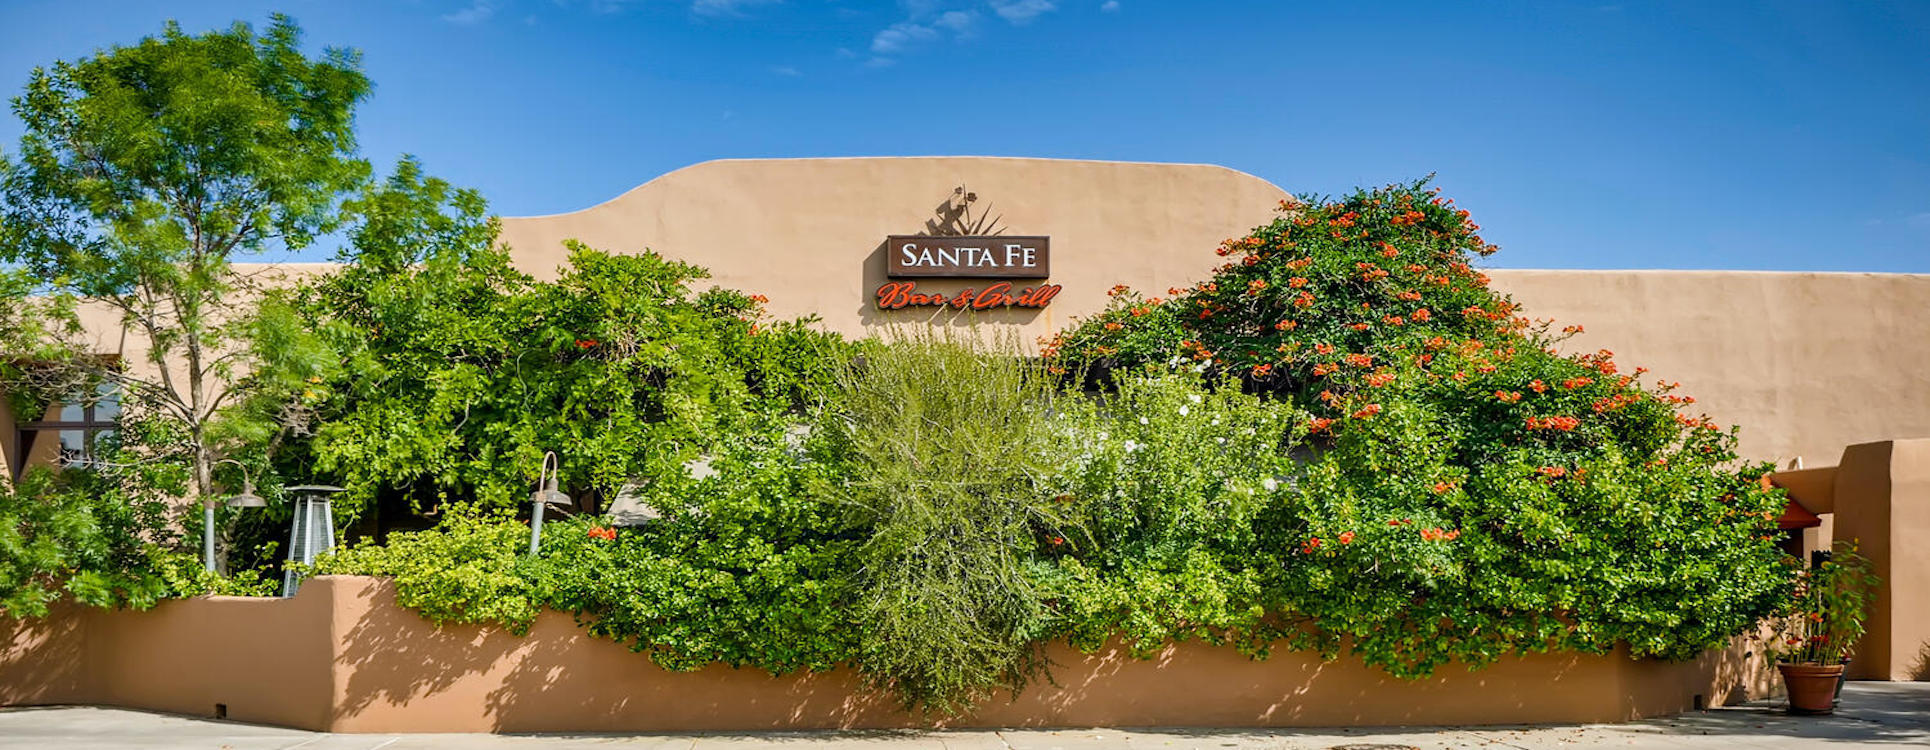 Santa Fe Bar & Grill and shrubs, located in Santa Fe, NM